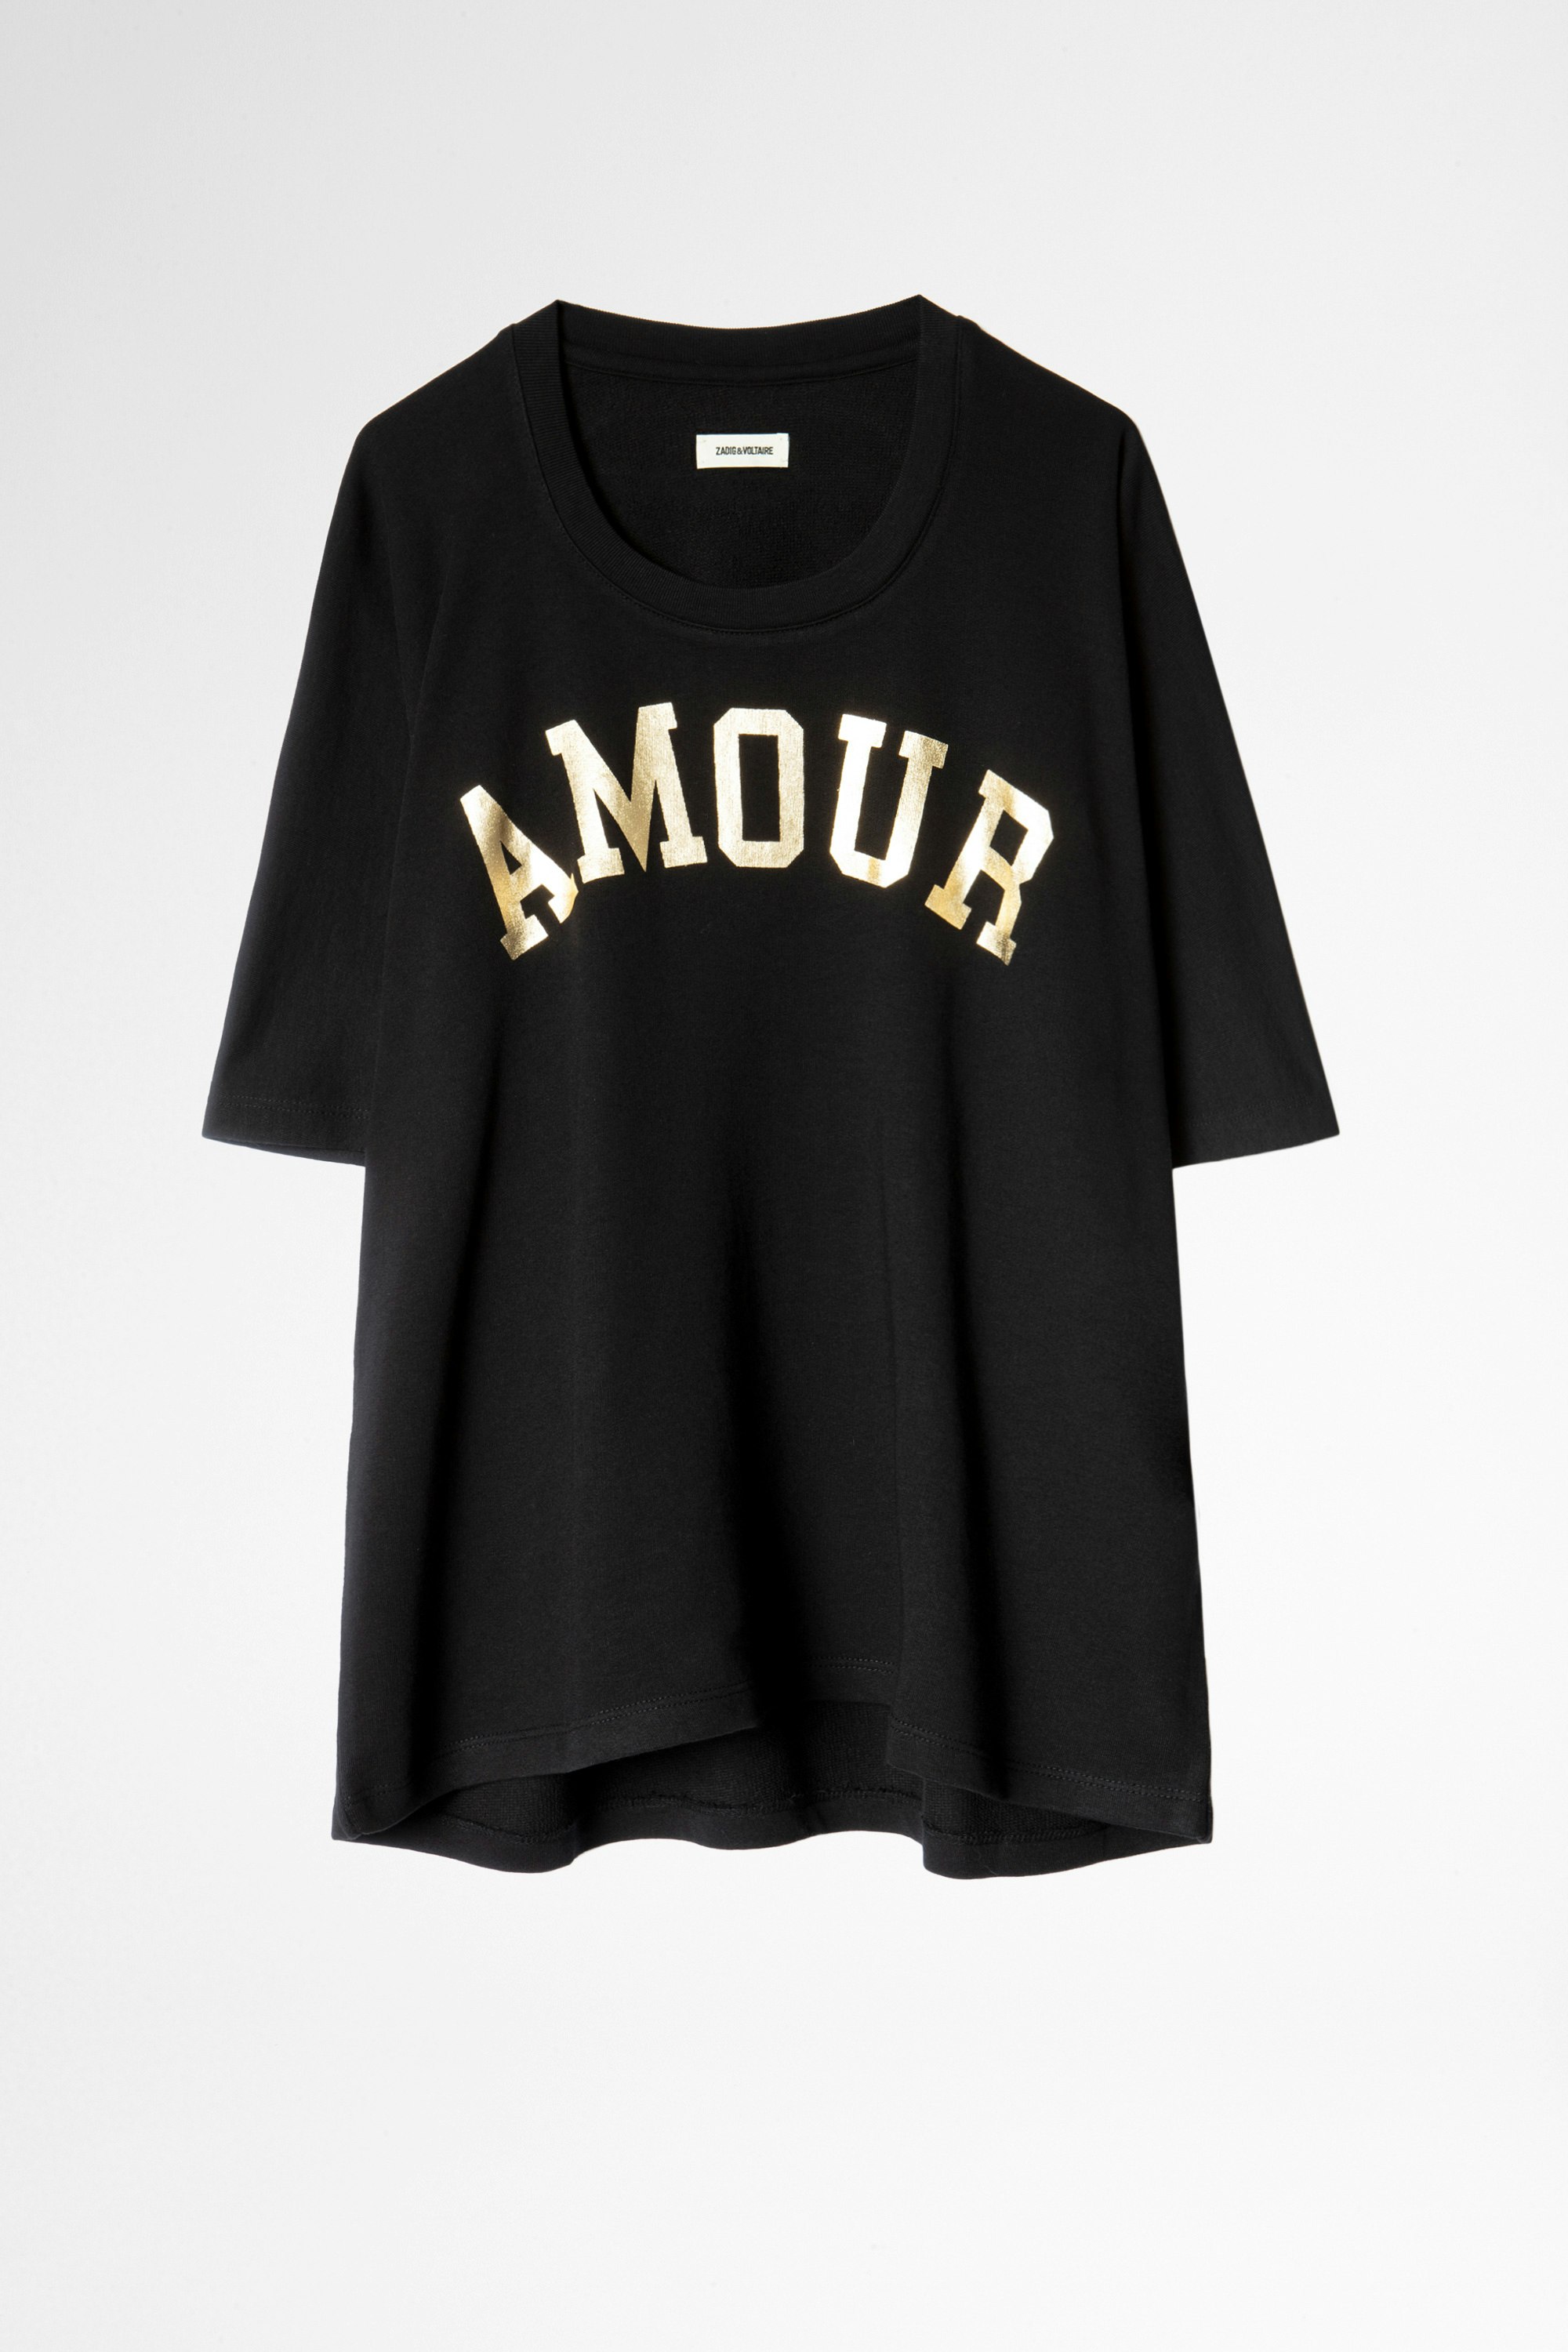 Portland Amour Sweatshirt Women’s black short-sleeved slogan sweatshirt.